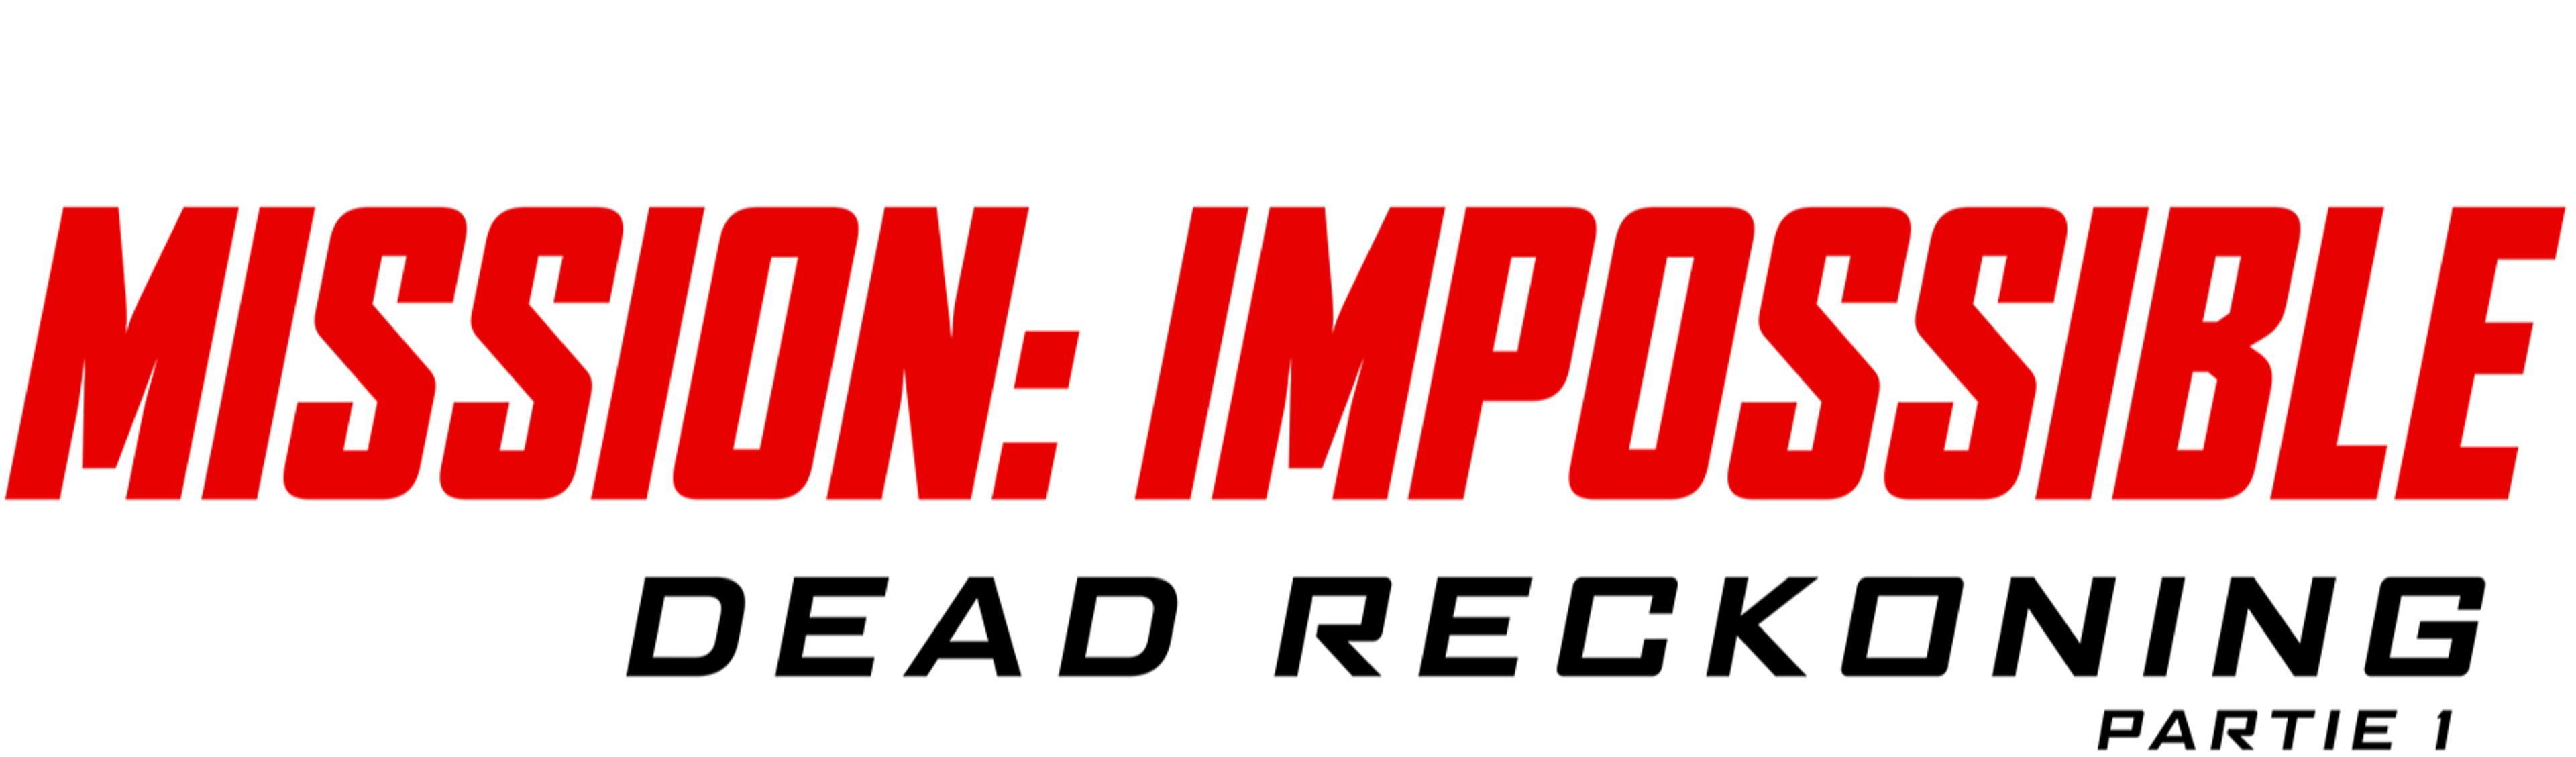 Mission : Impossible Dead Reckoning partie 1